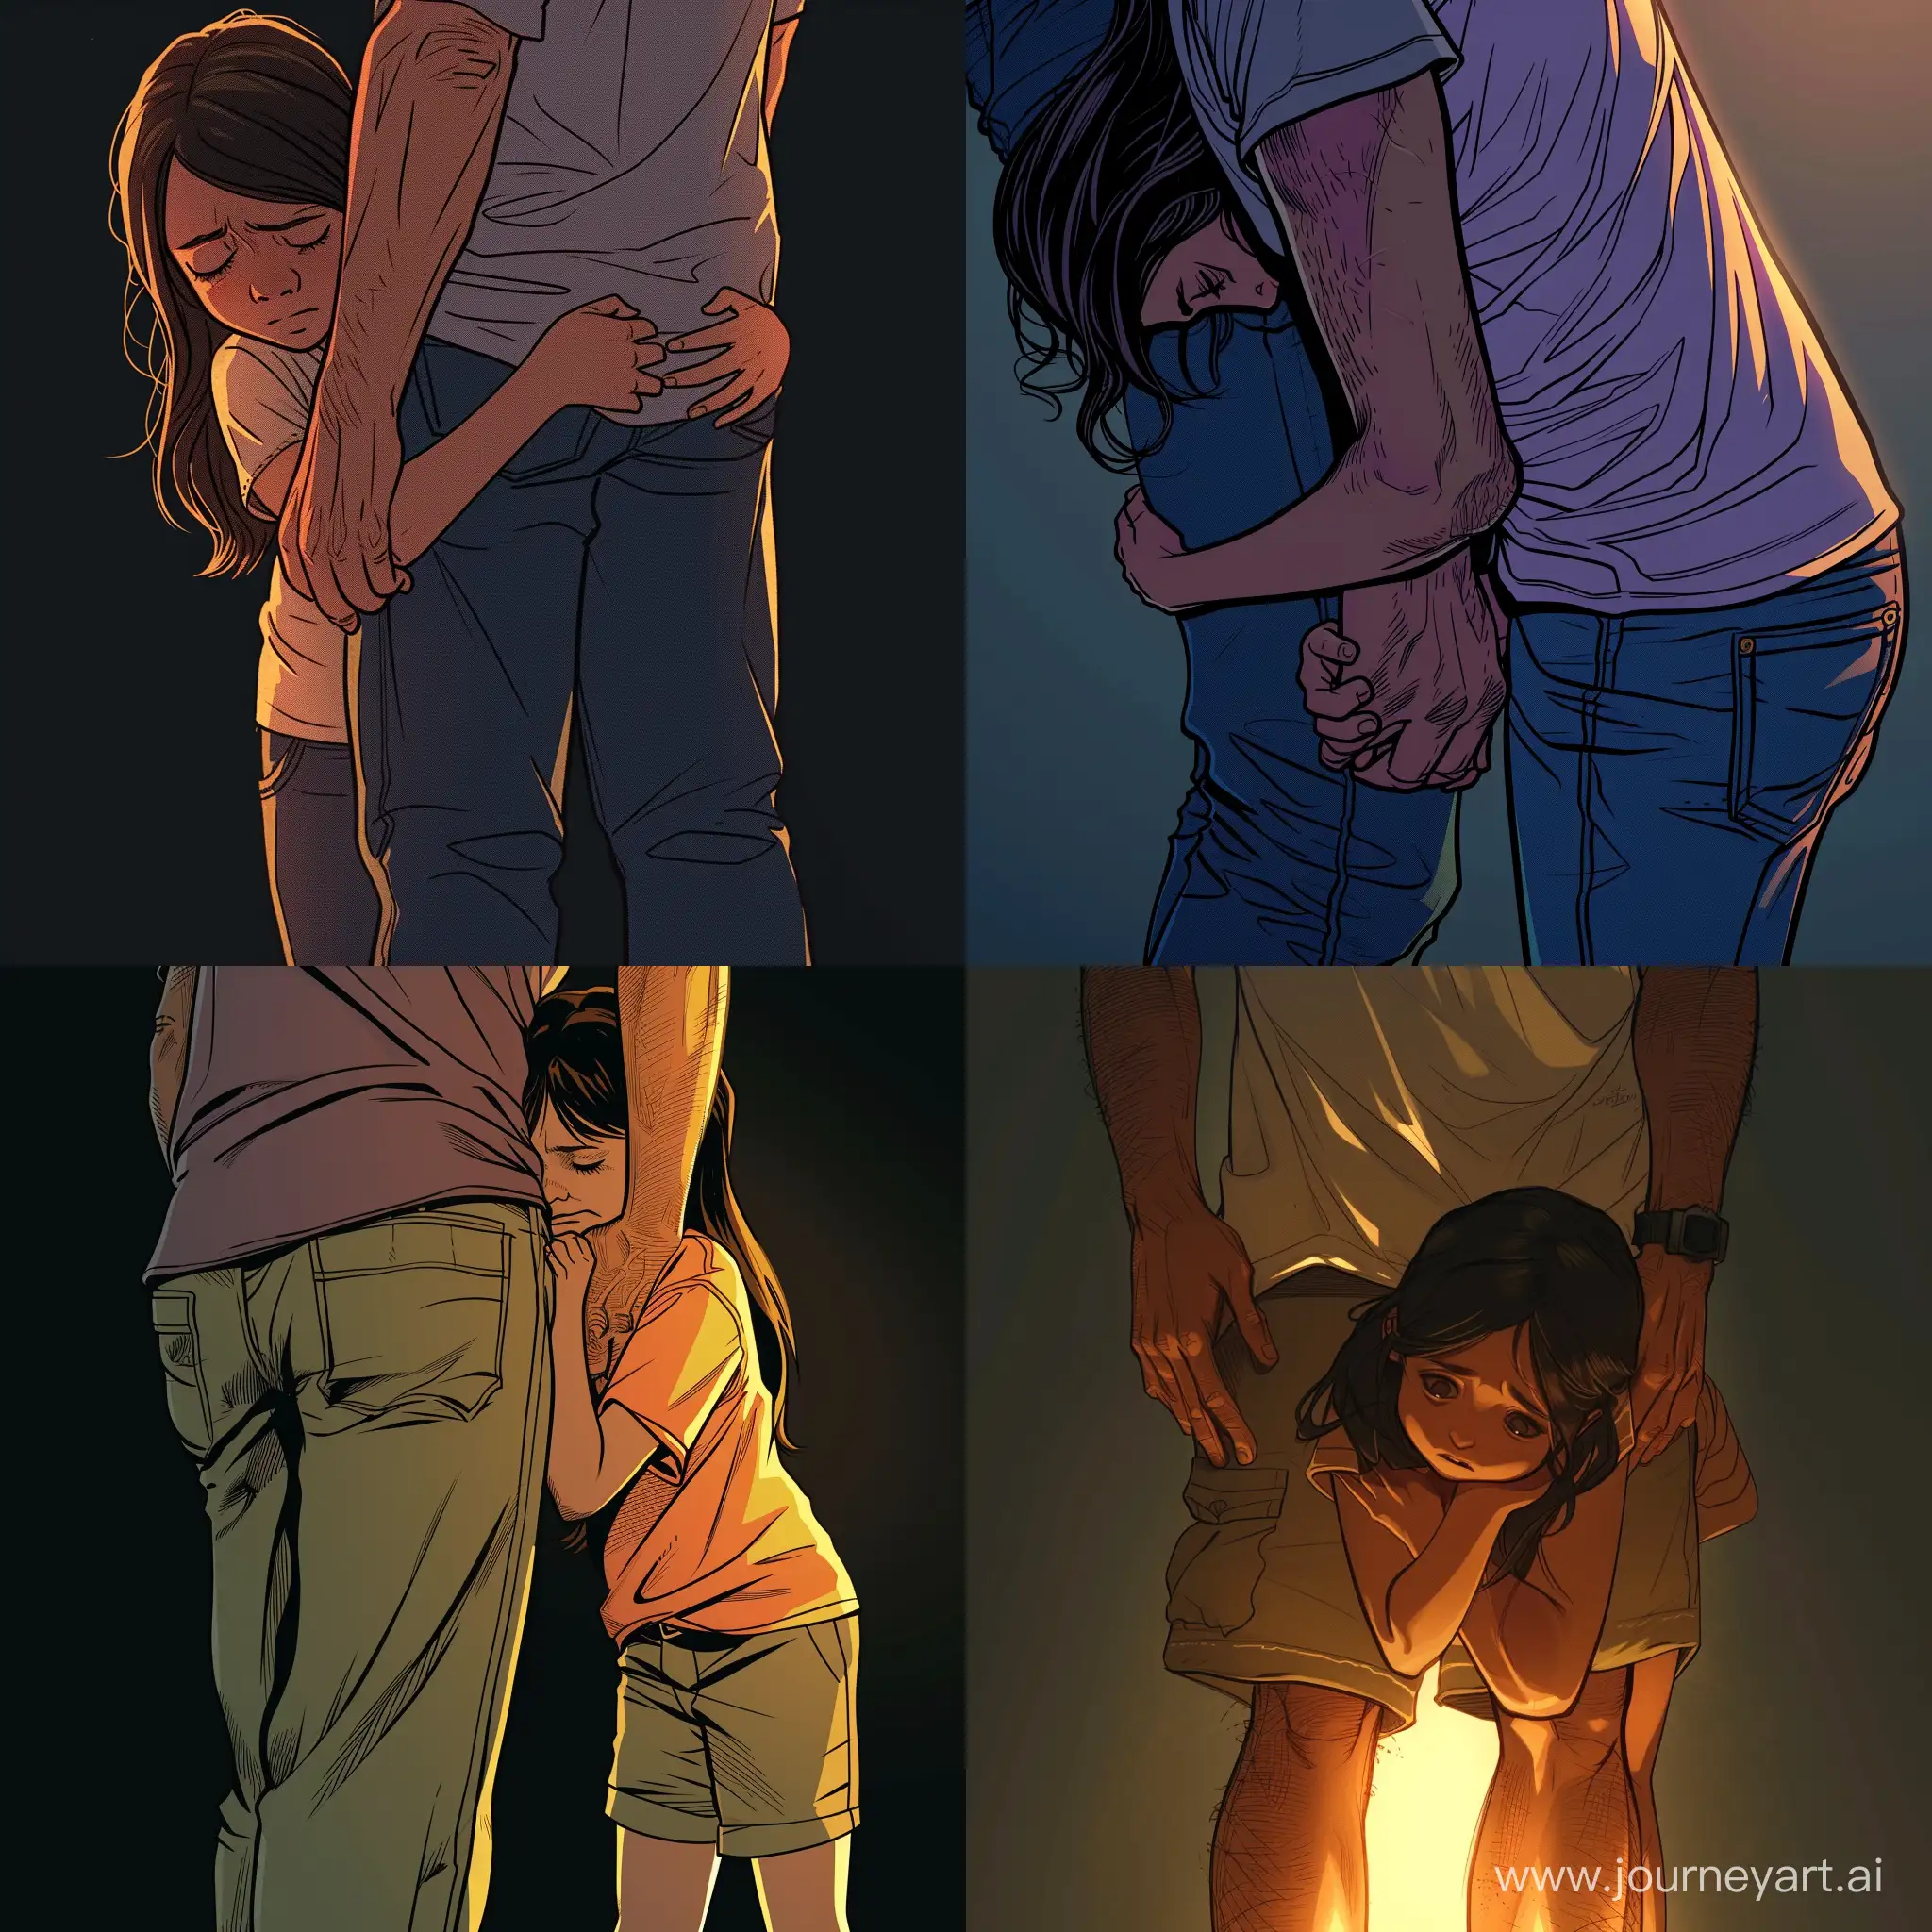 sad little daughter hugs her father's legs, little lighting, modern american comic book style.